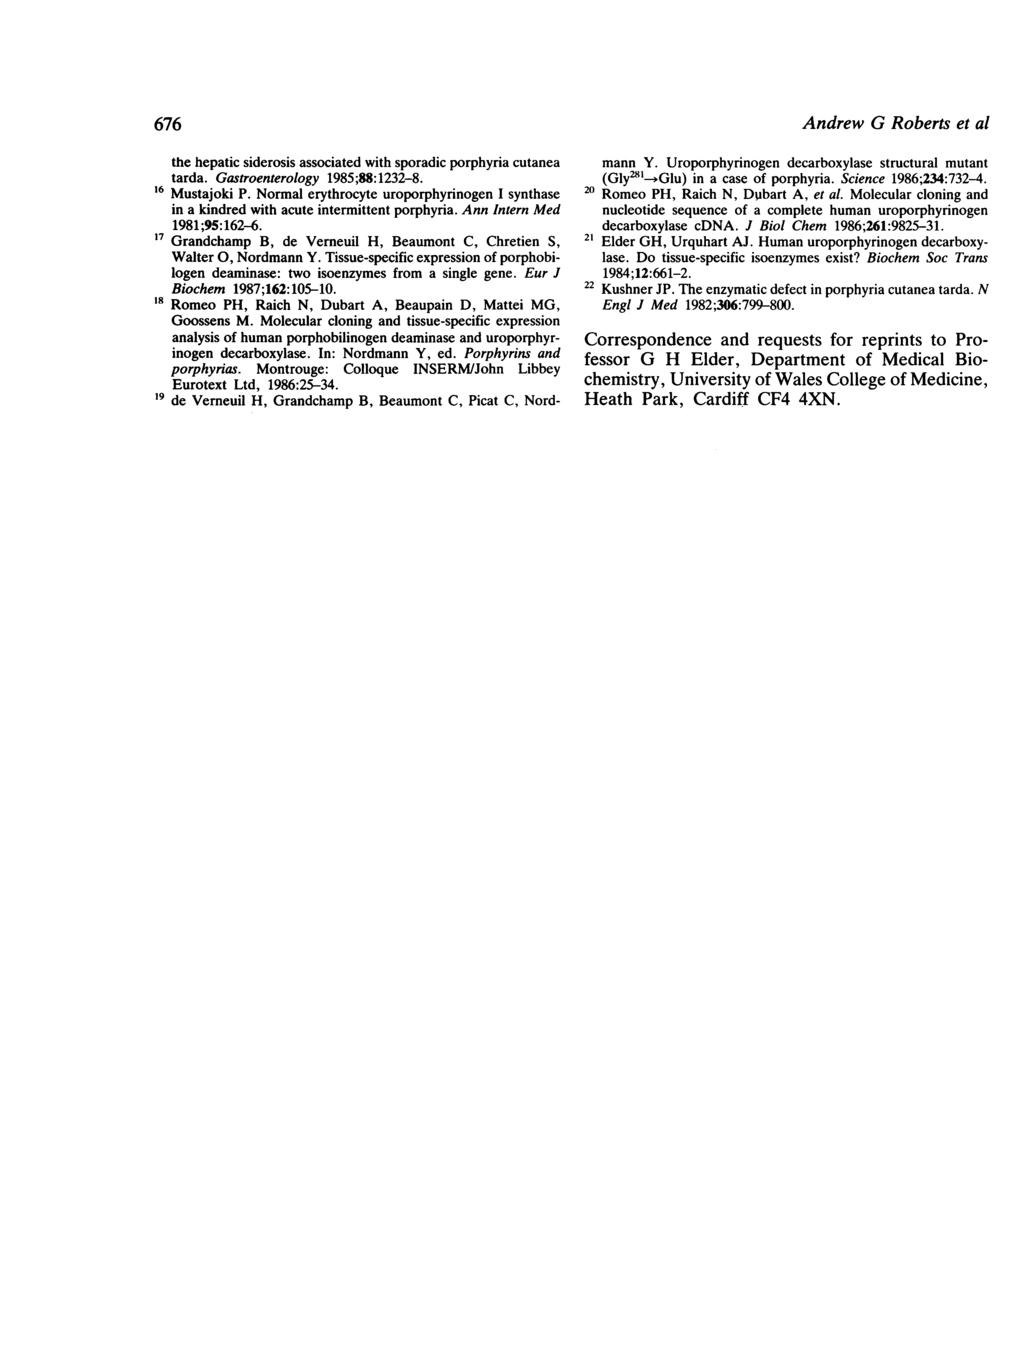 676 Andrew G Roberts et al the hepatic siderosis associated with sporadic porphyria cutanea tarda. Gastroenterology 1985;88:1232-8. 16 Mustajoki P.